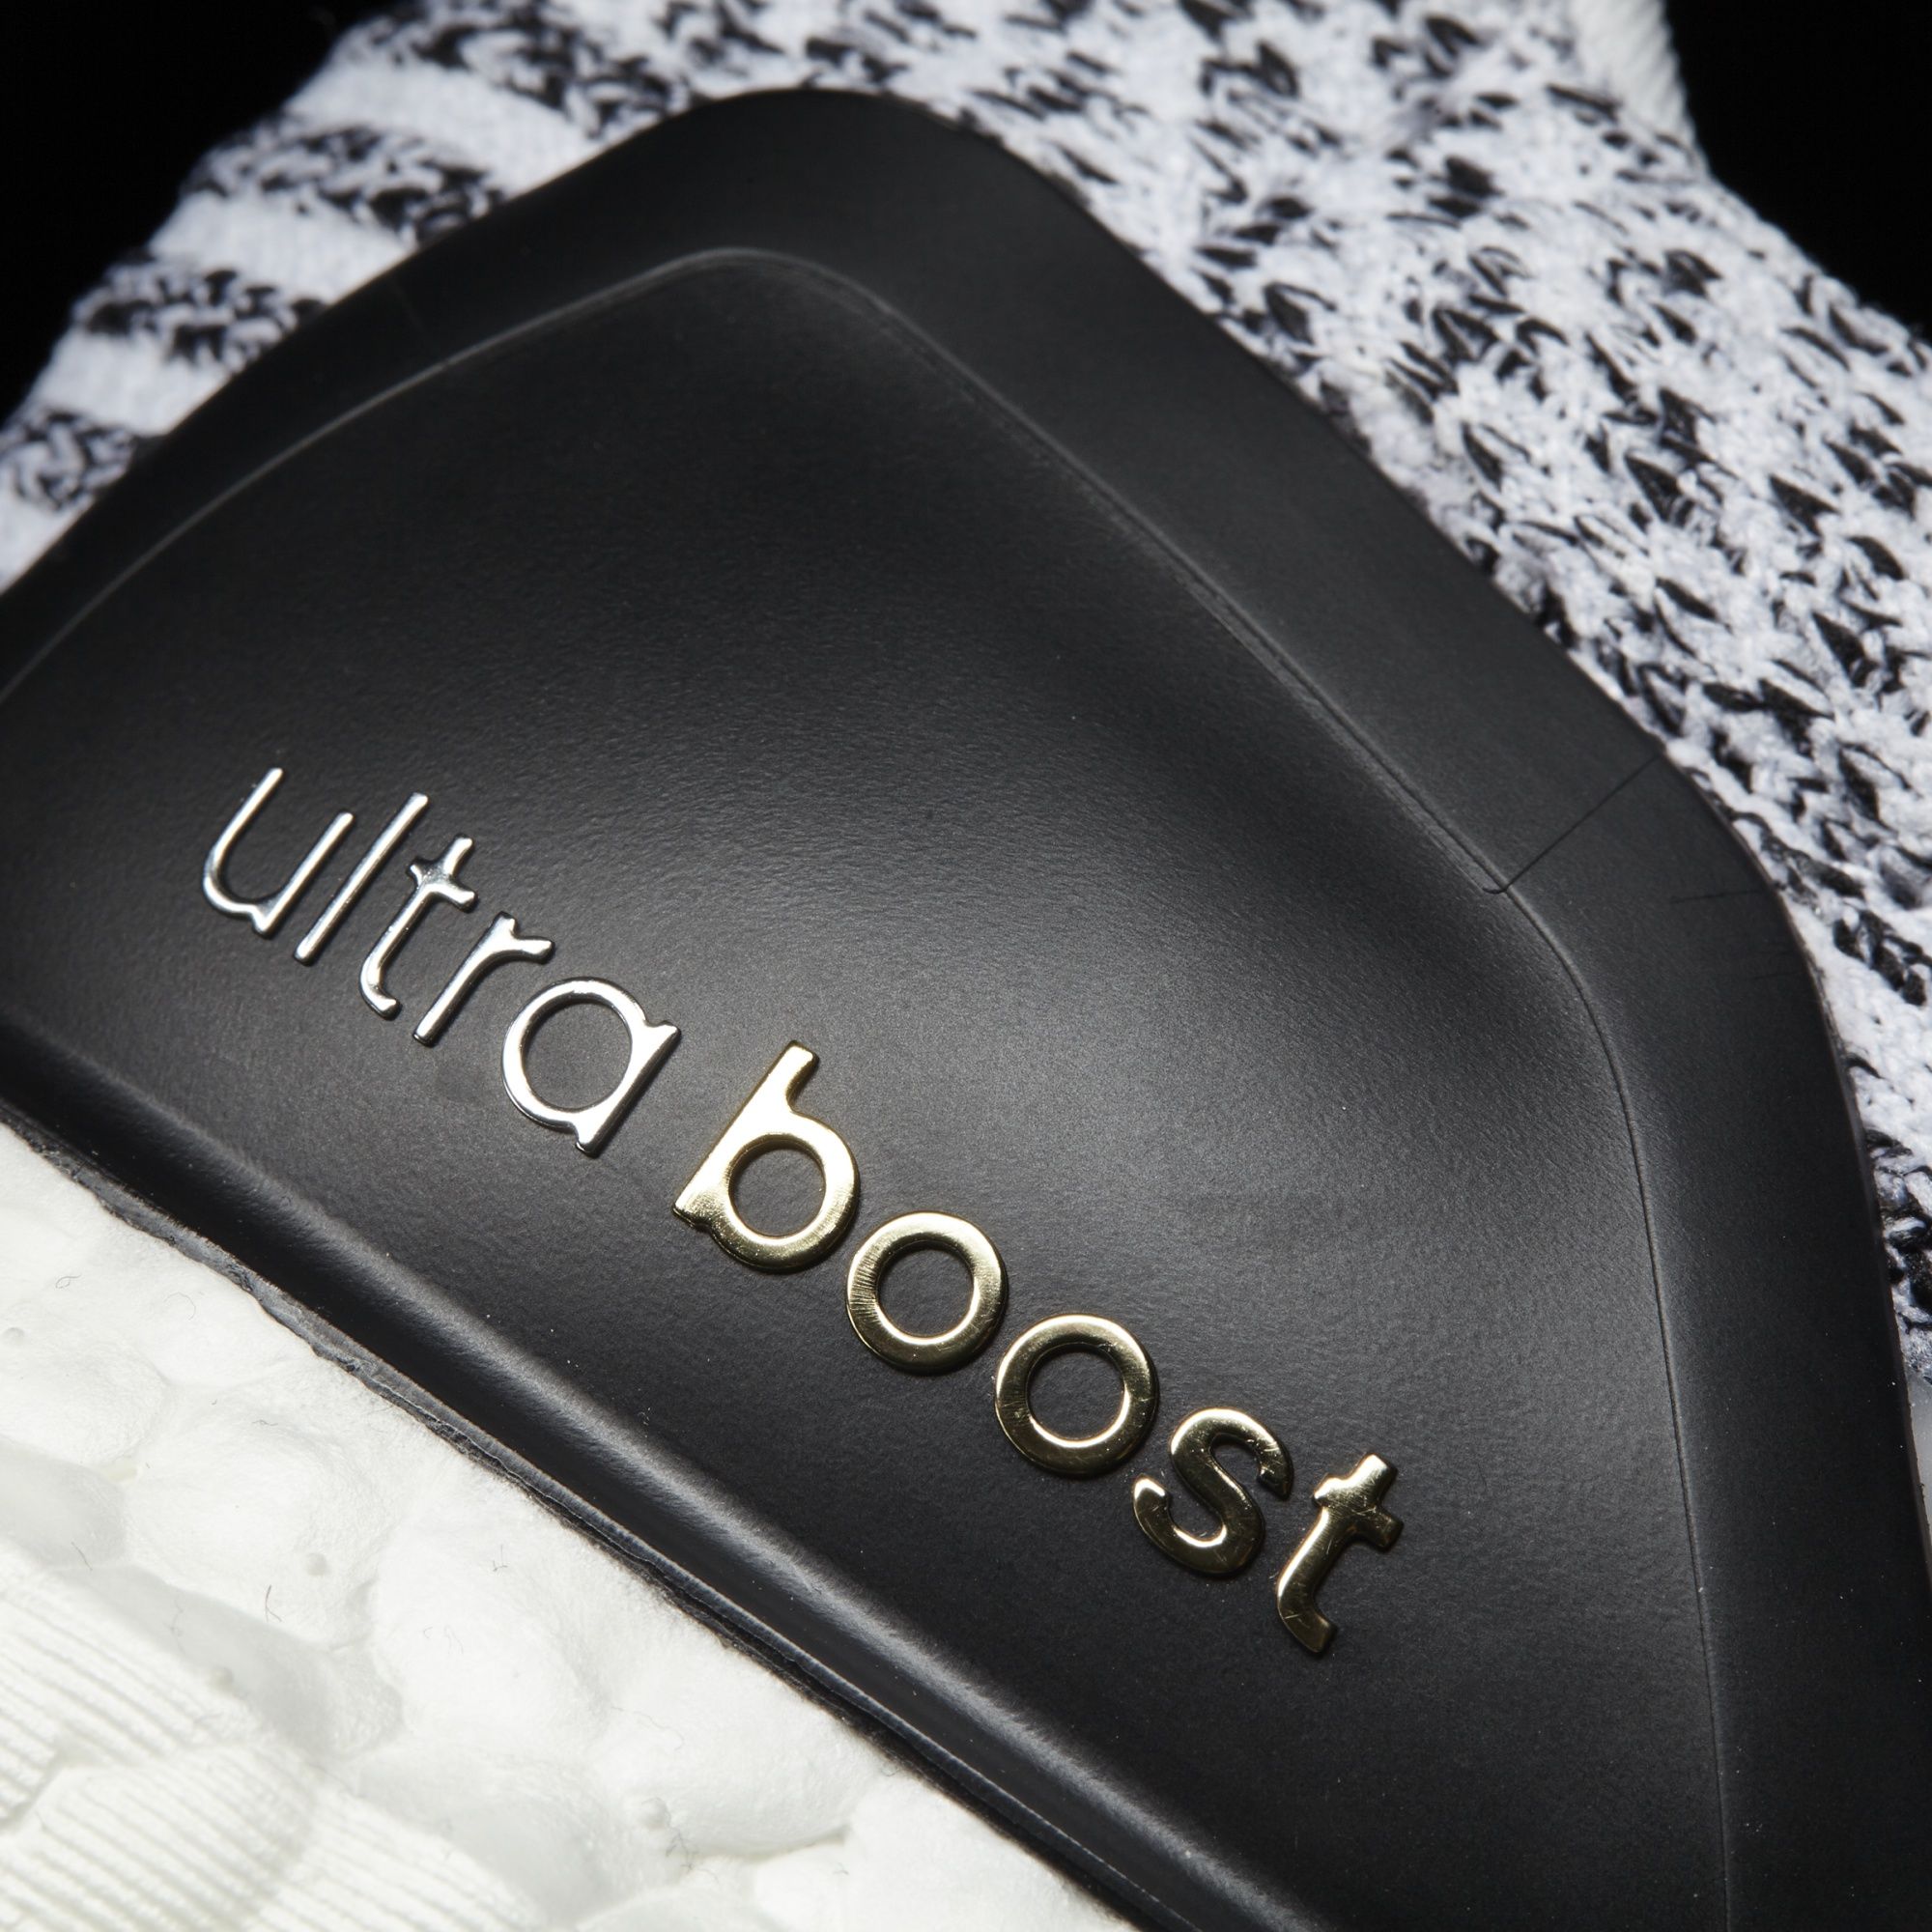 Adidas Ultra Boost 3.0 S80636 Oreo Heel Detail